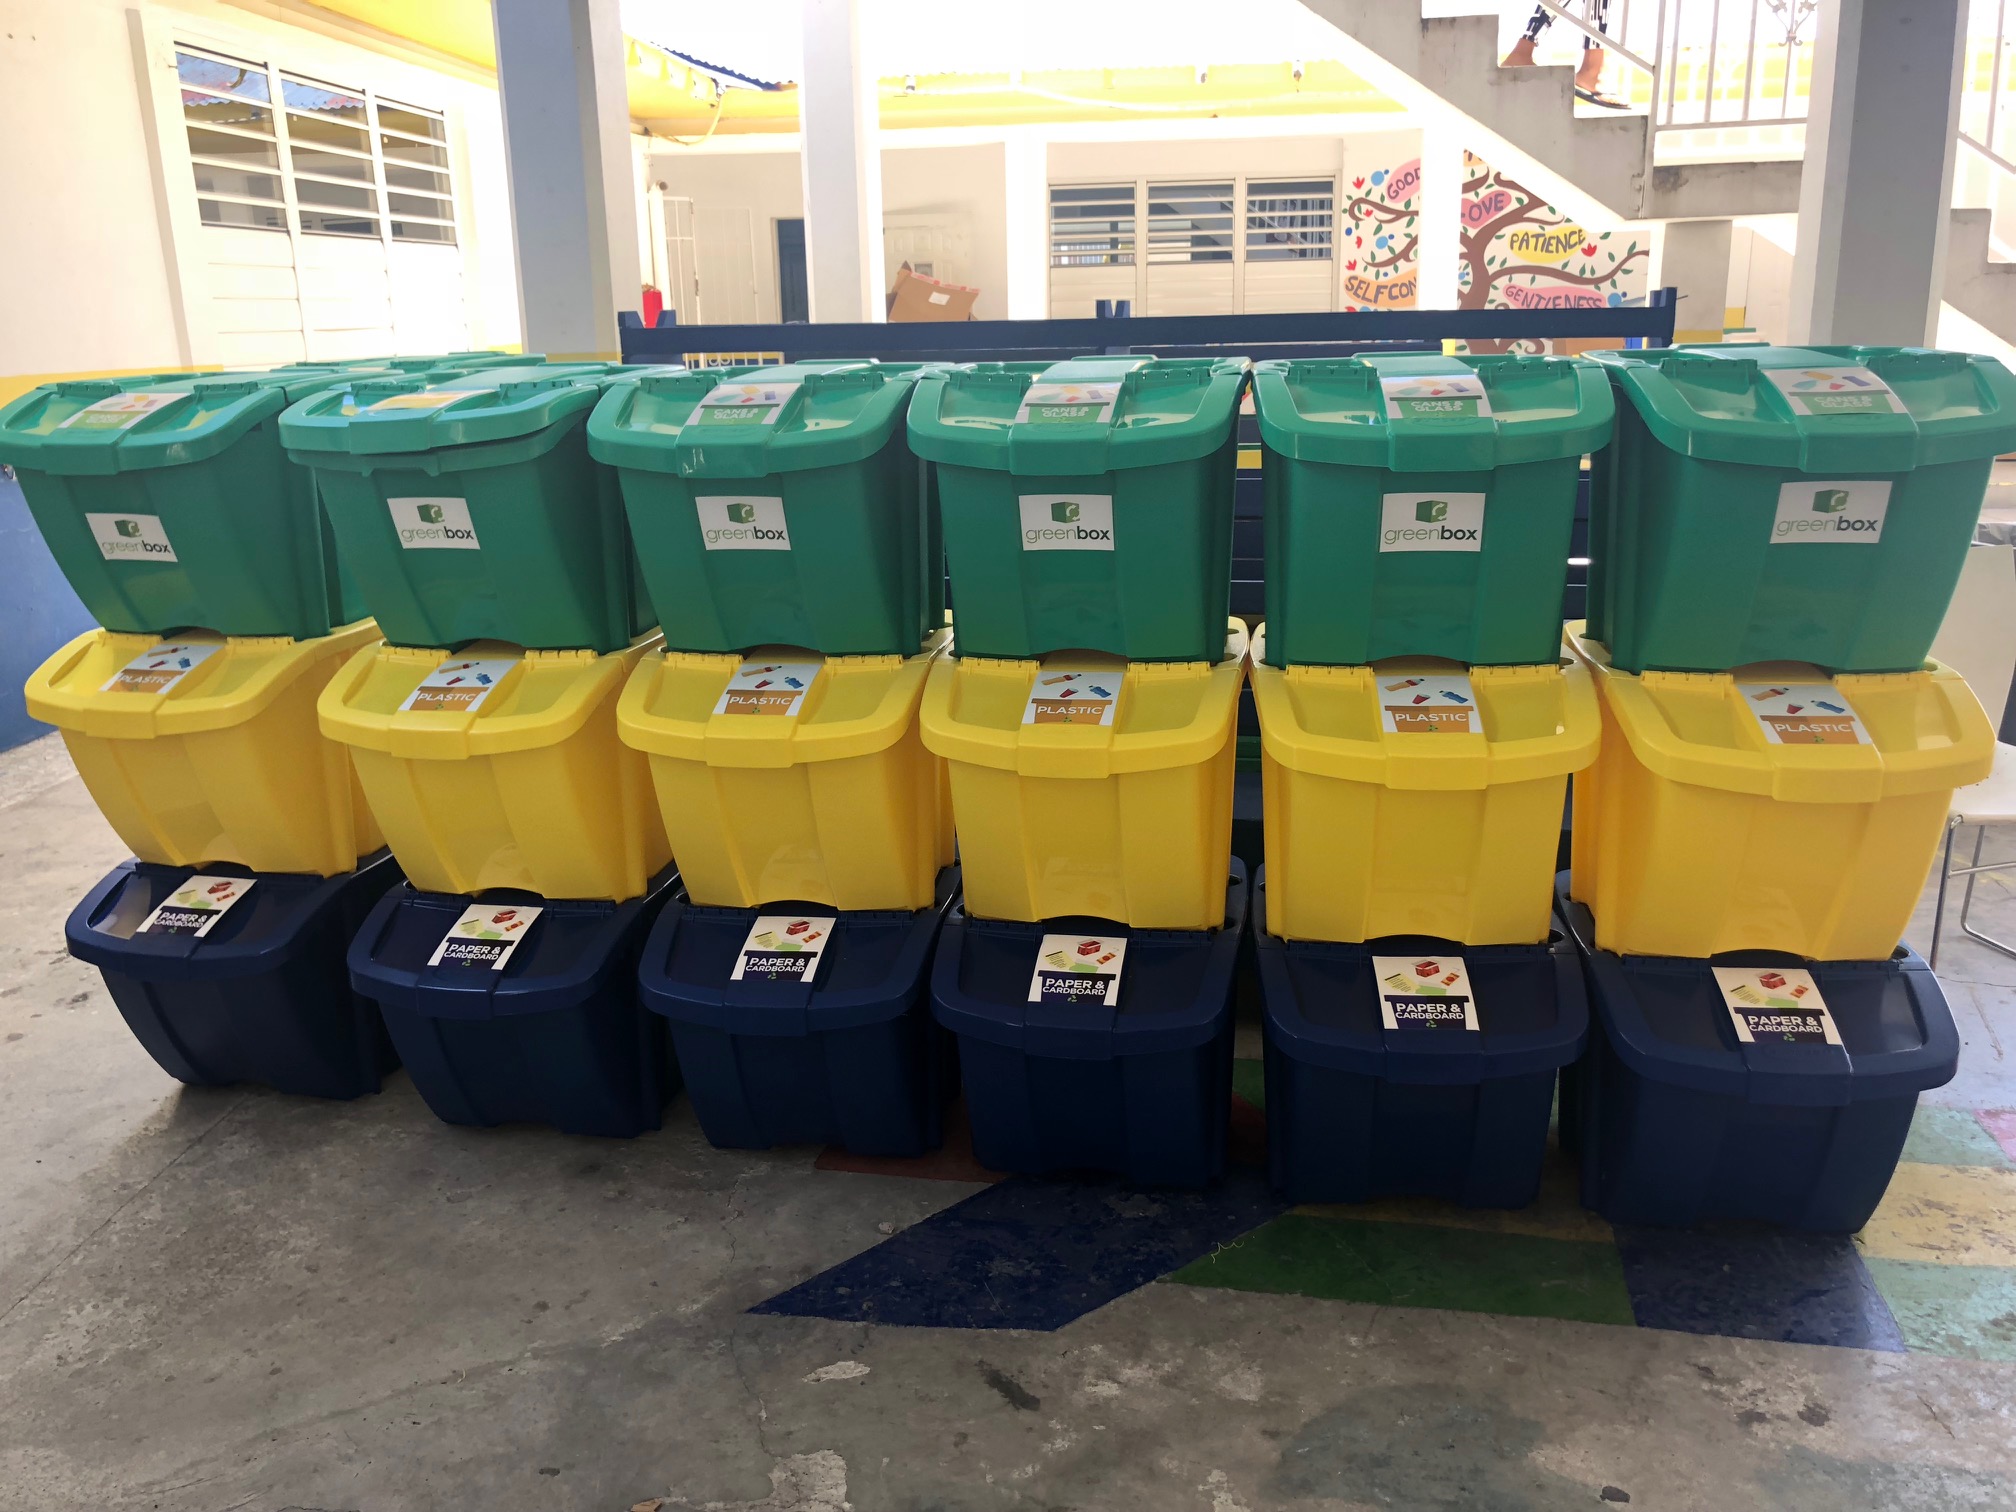 GreenBox recycling bins